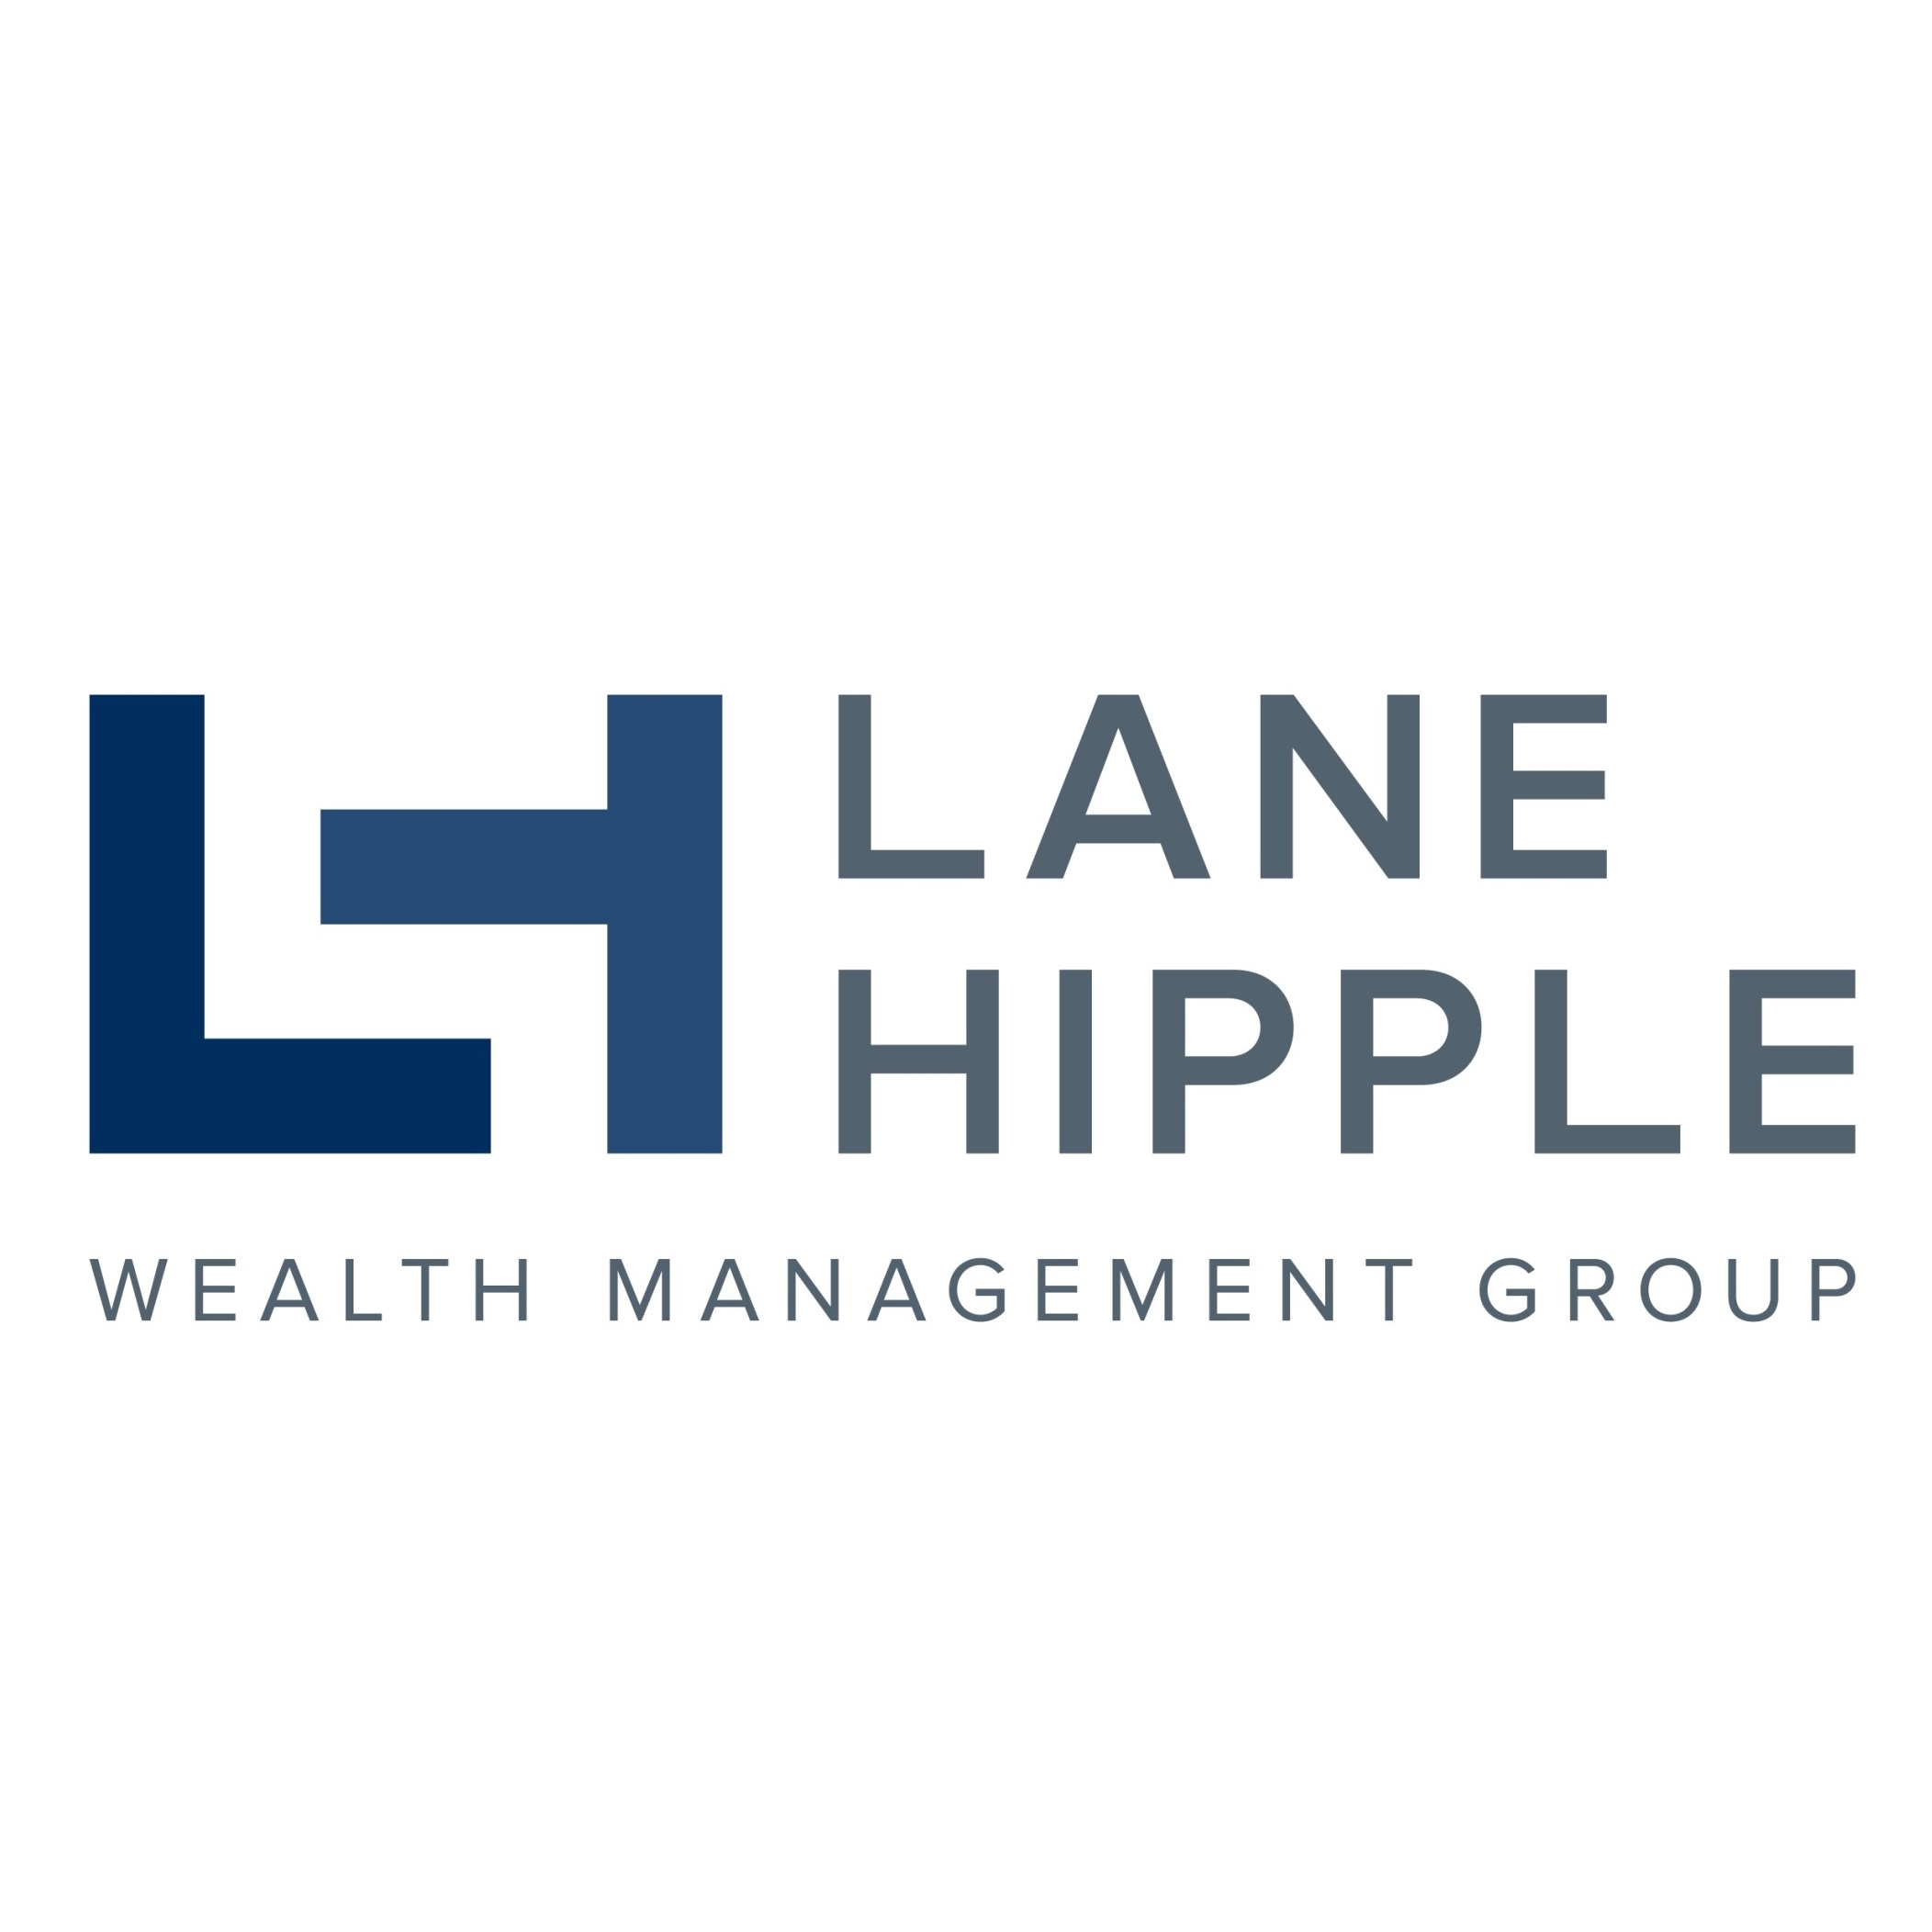 Lane Hipple Wealth Management Group